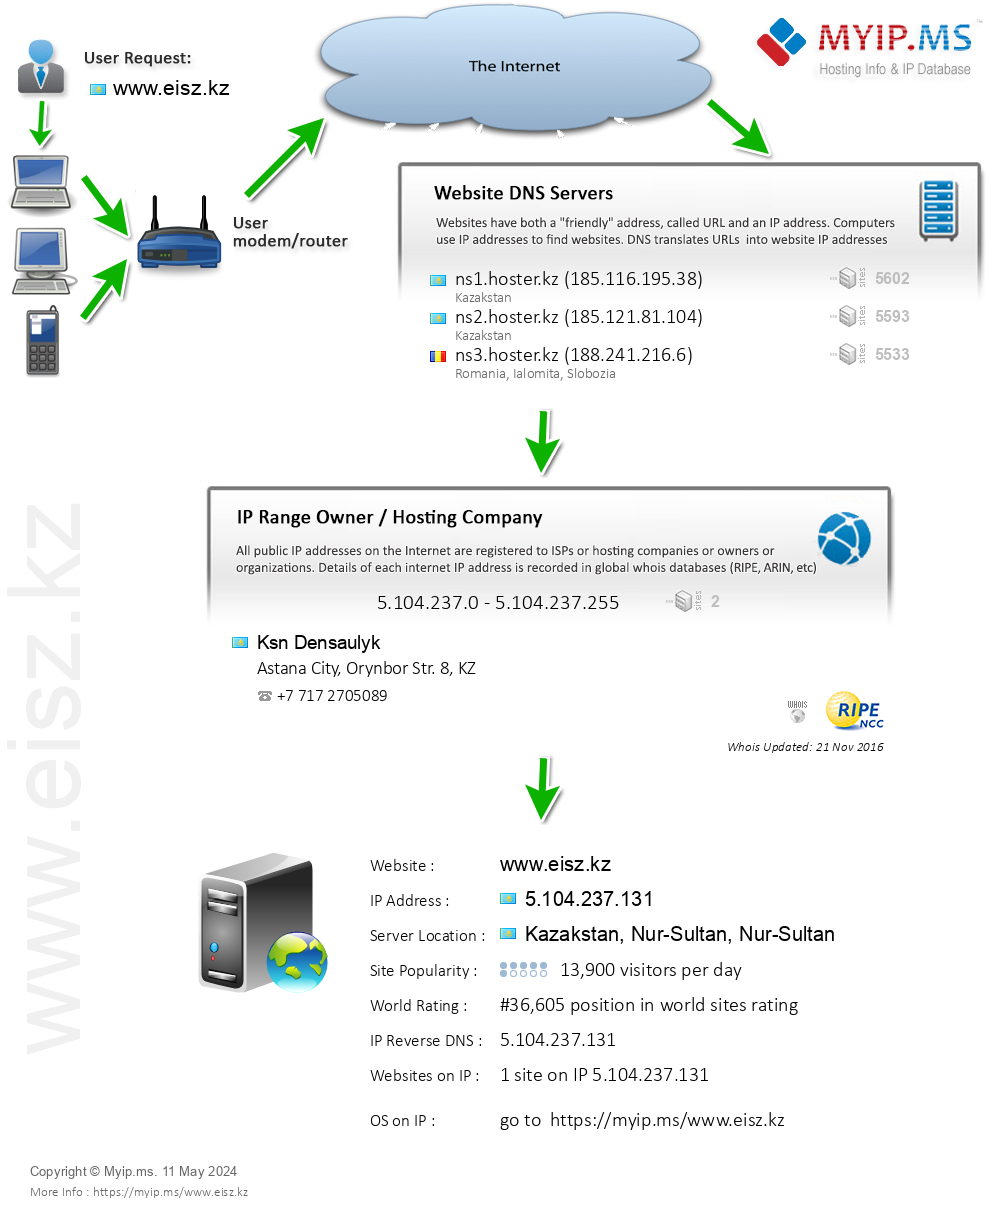 Eisz.kz - Website Hosting Visual IP Diagram